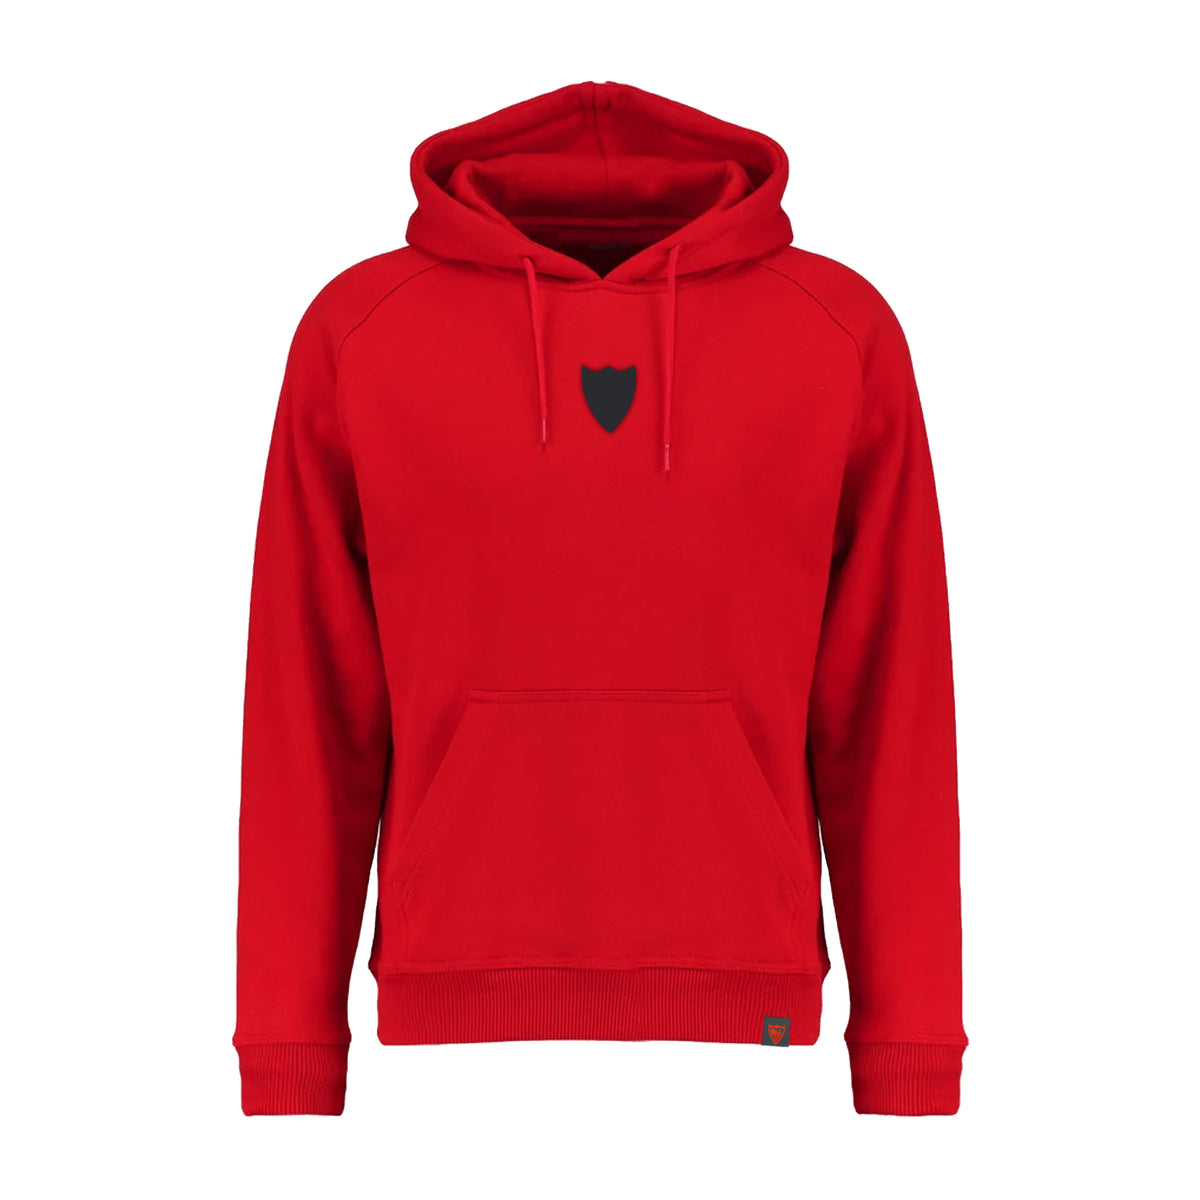 Kids red travel sweatshirt with hood 22/23